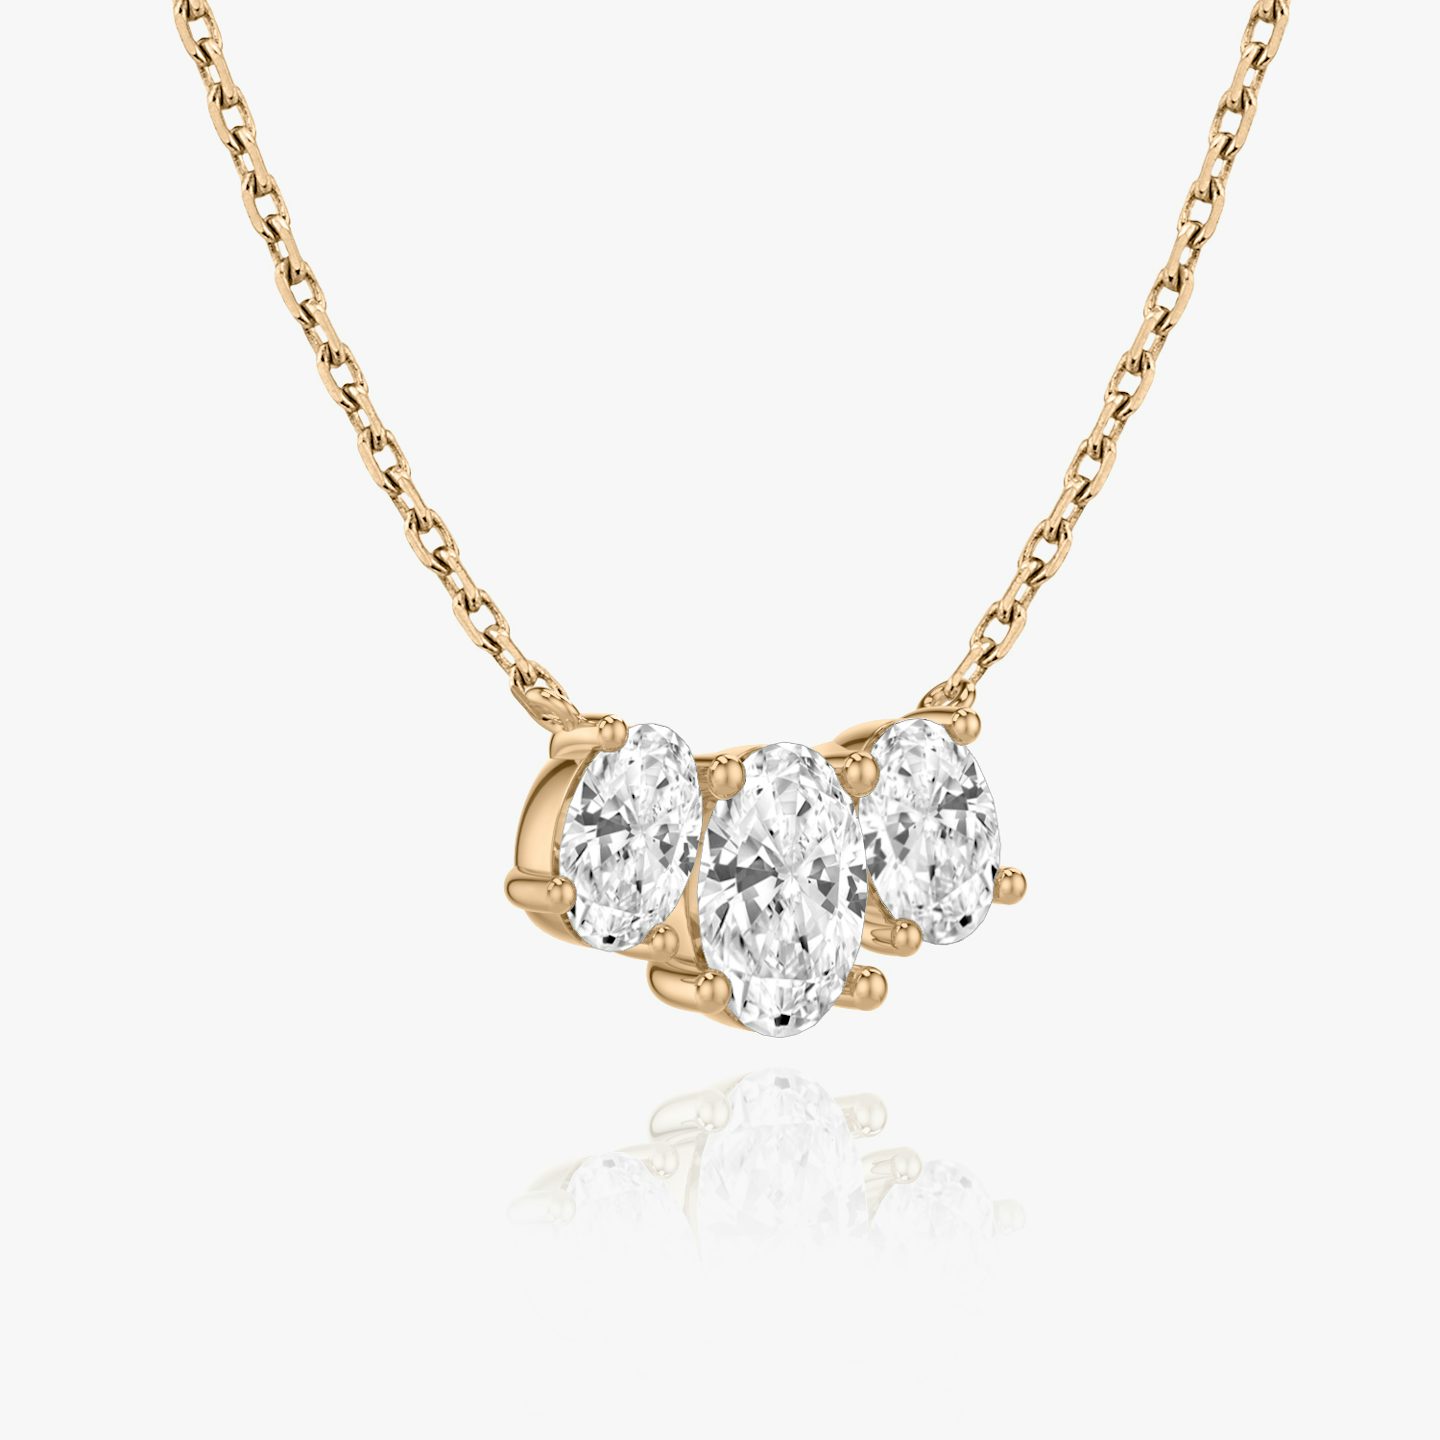 Arc Necklace | Oval | 14k | 14k Rose Gold | Chain length: 16-18 | Diamond size: Large | Diamond count: 3